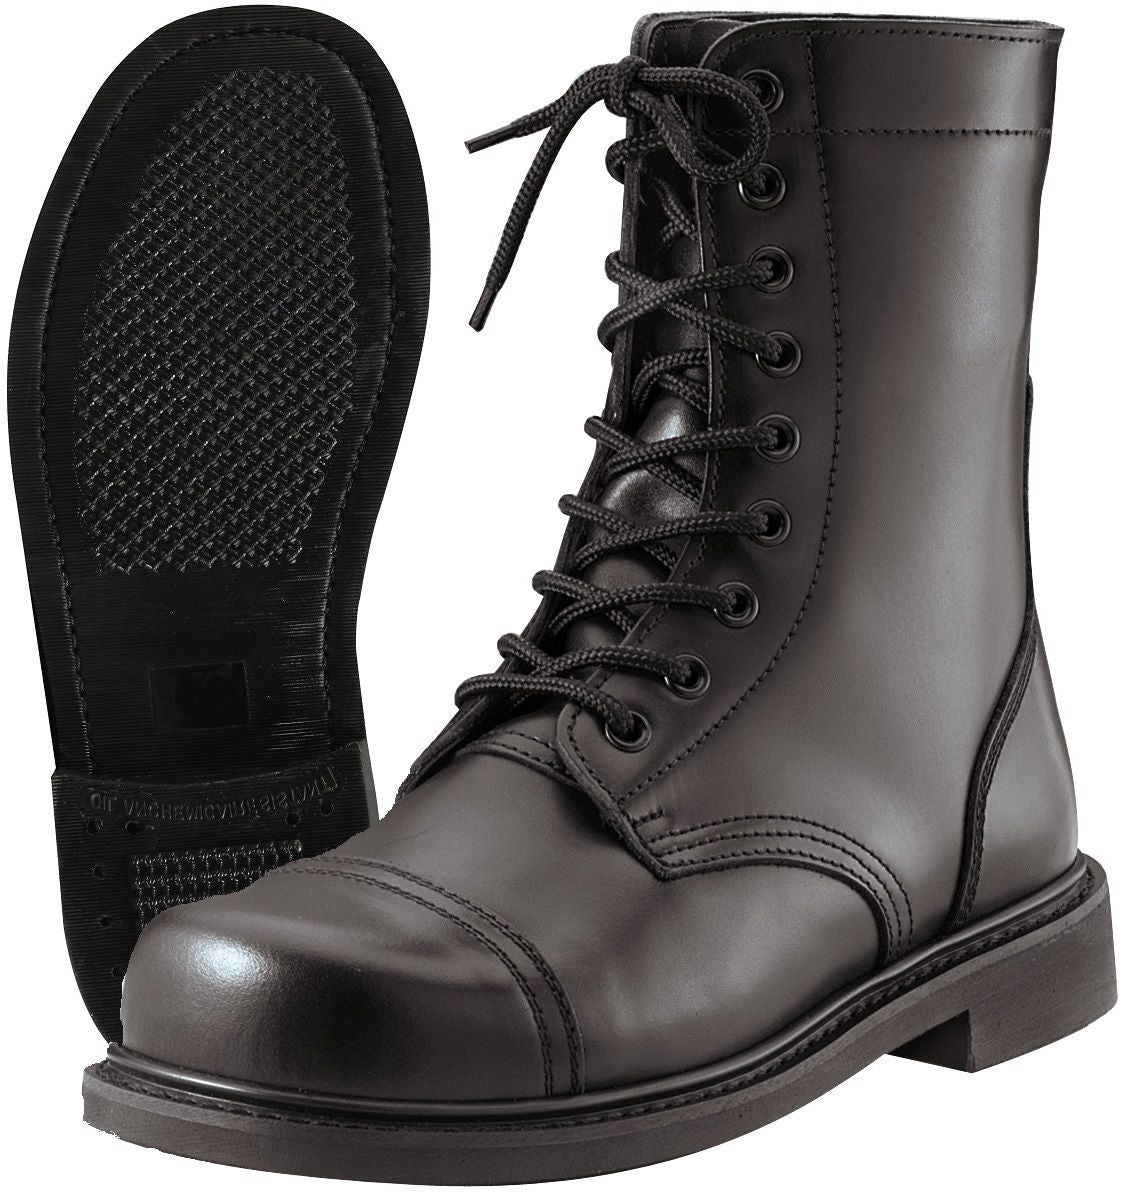 Mens GI Style Black Combat Boot